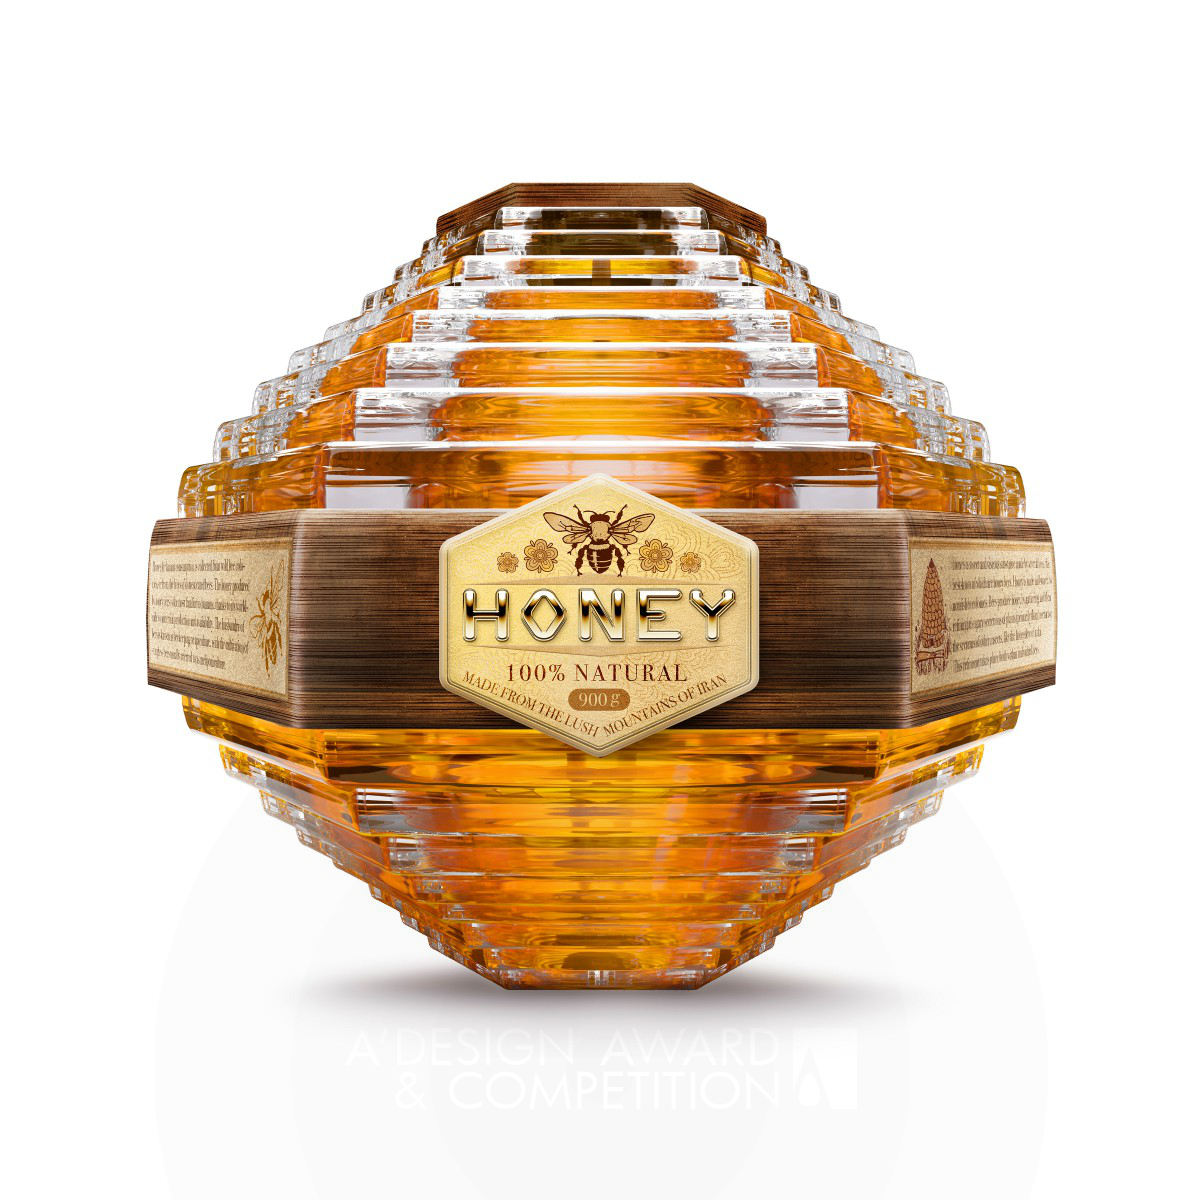 Honey Packaging Design by Wallrus Design Studio